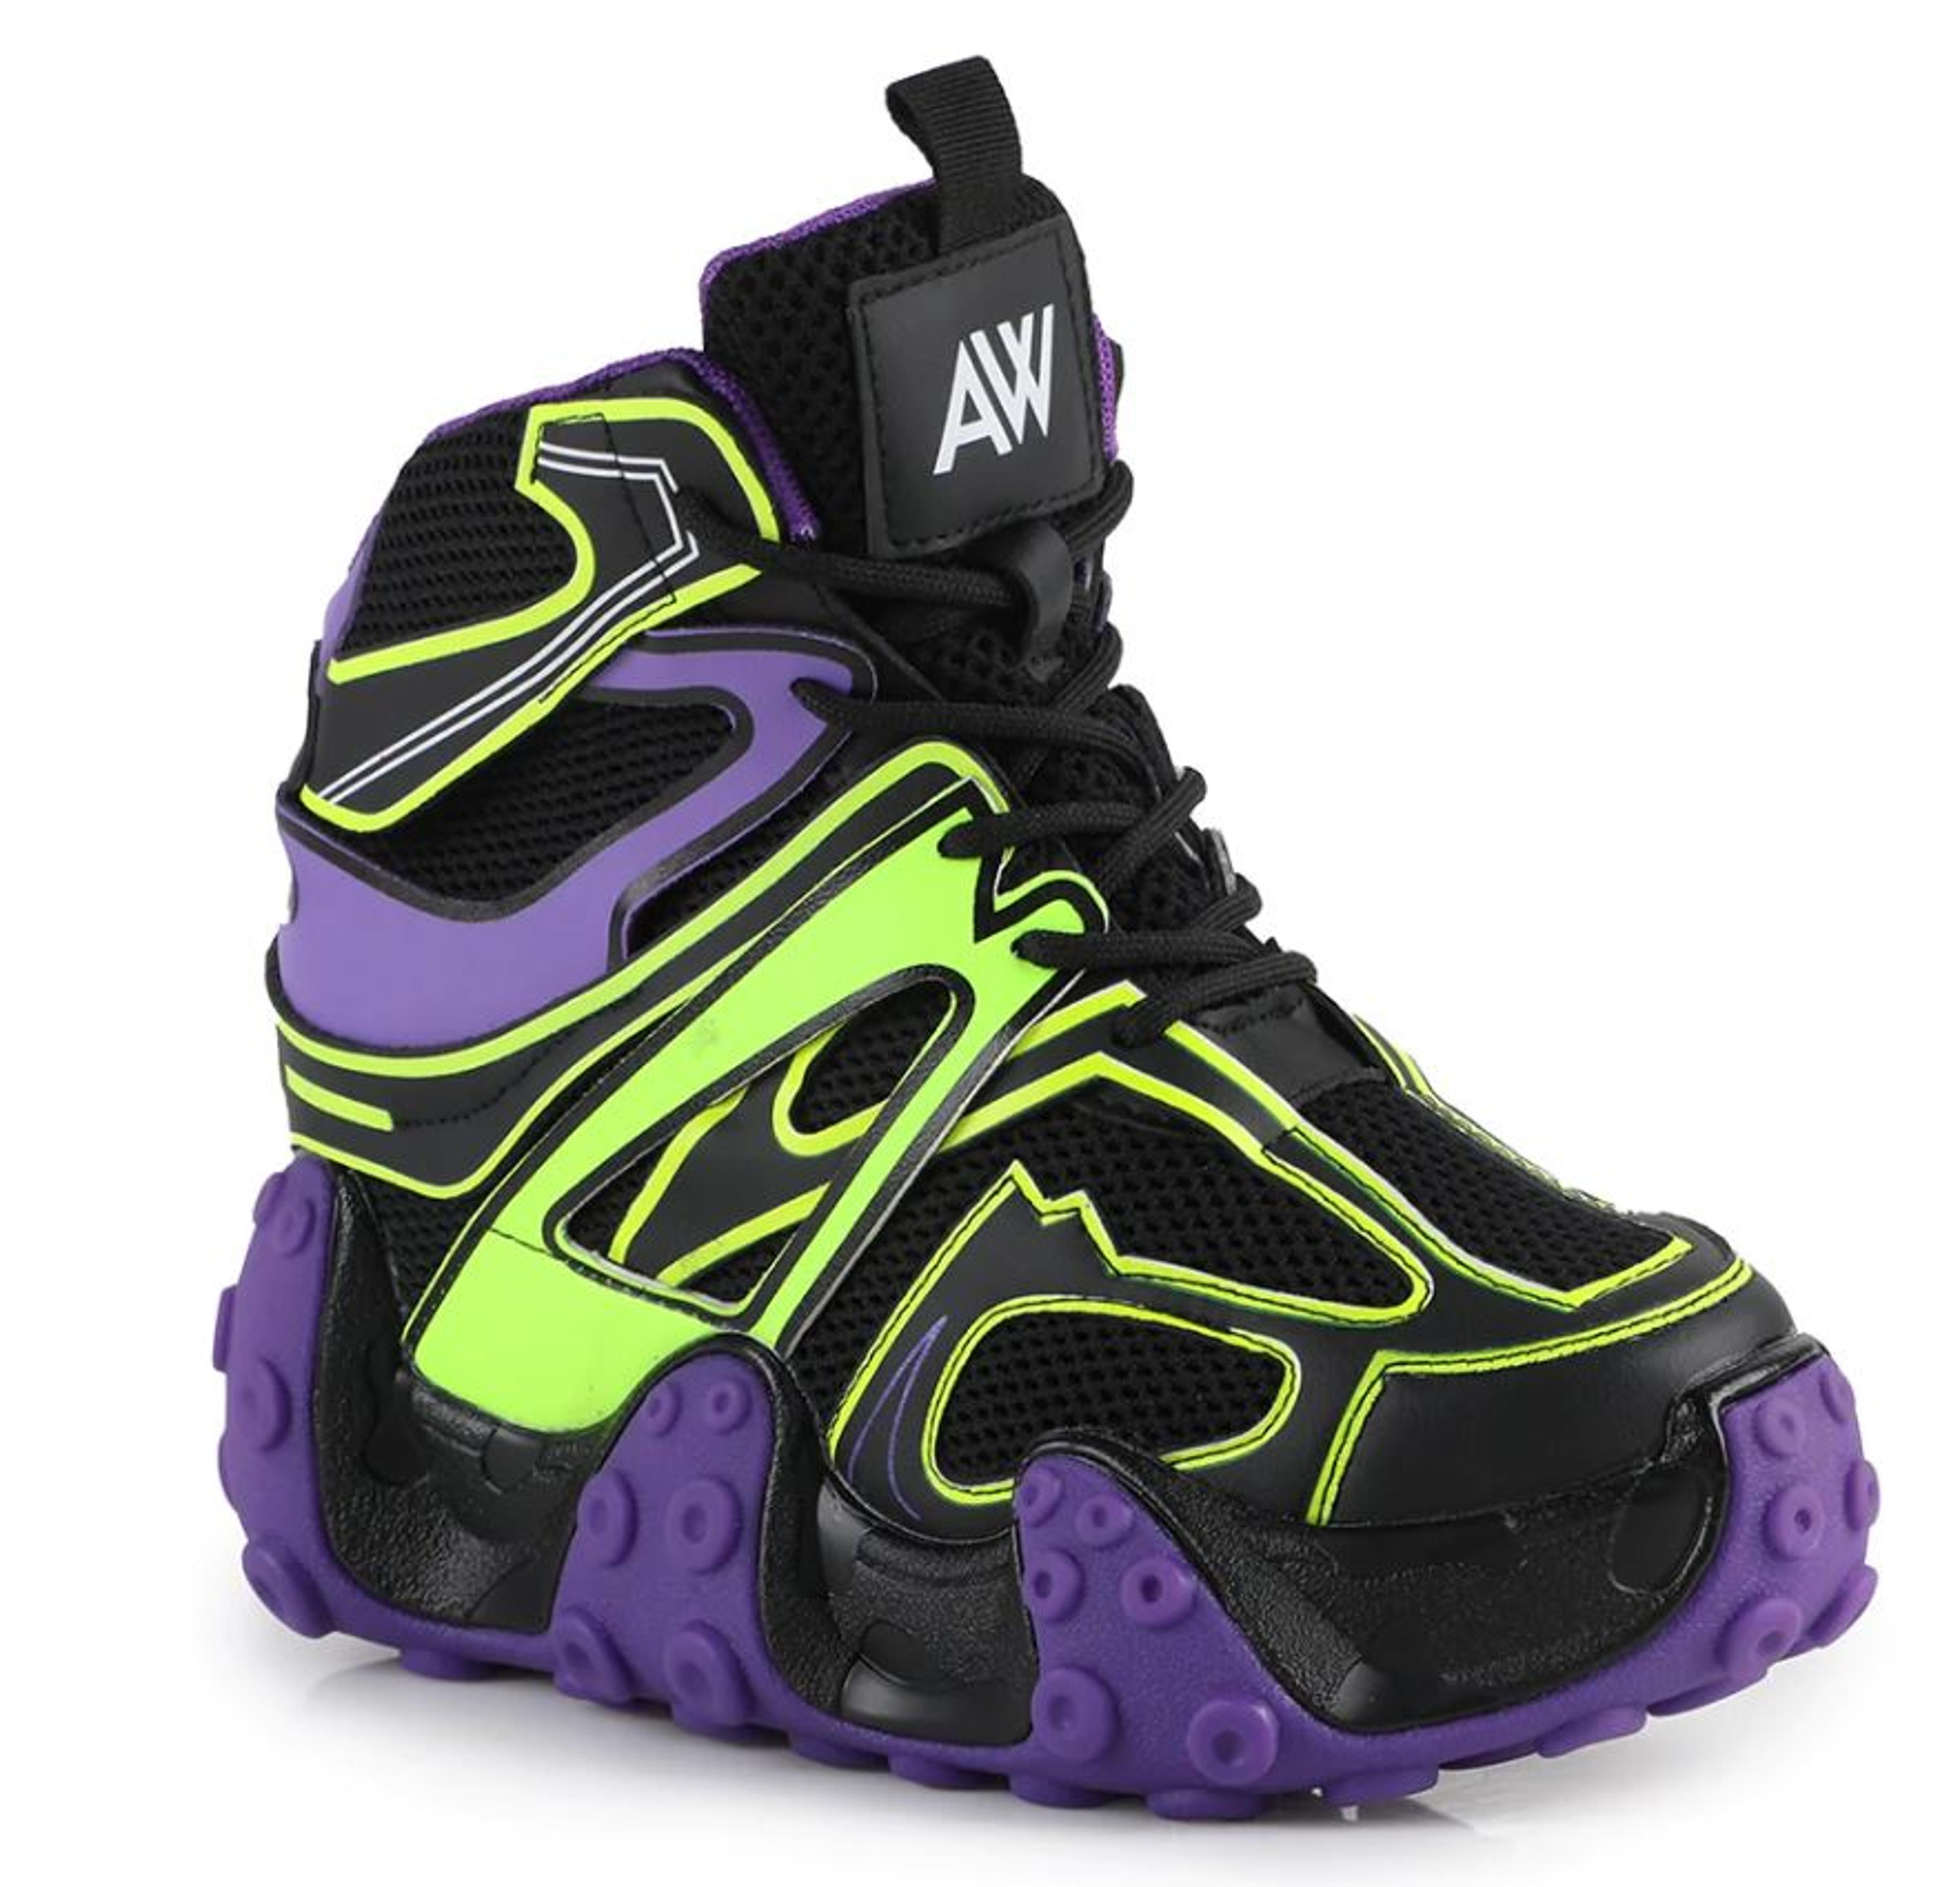 Wang Limited Lilac Purple White Platform Sneaker Knee Boots Hidden